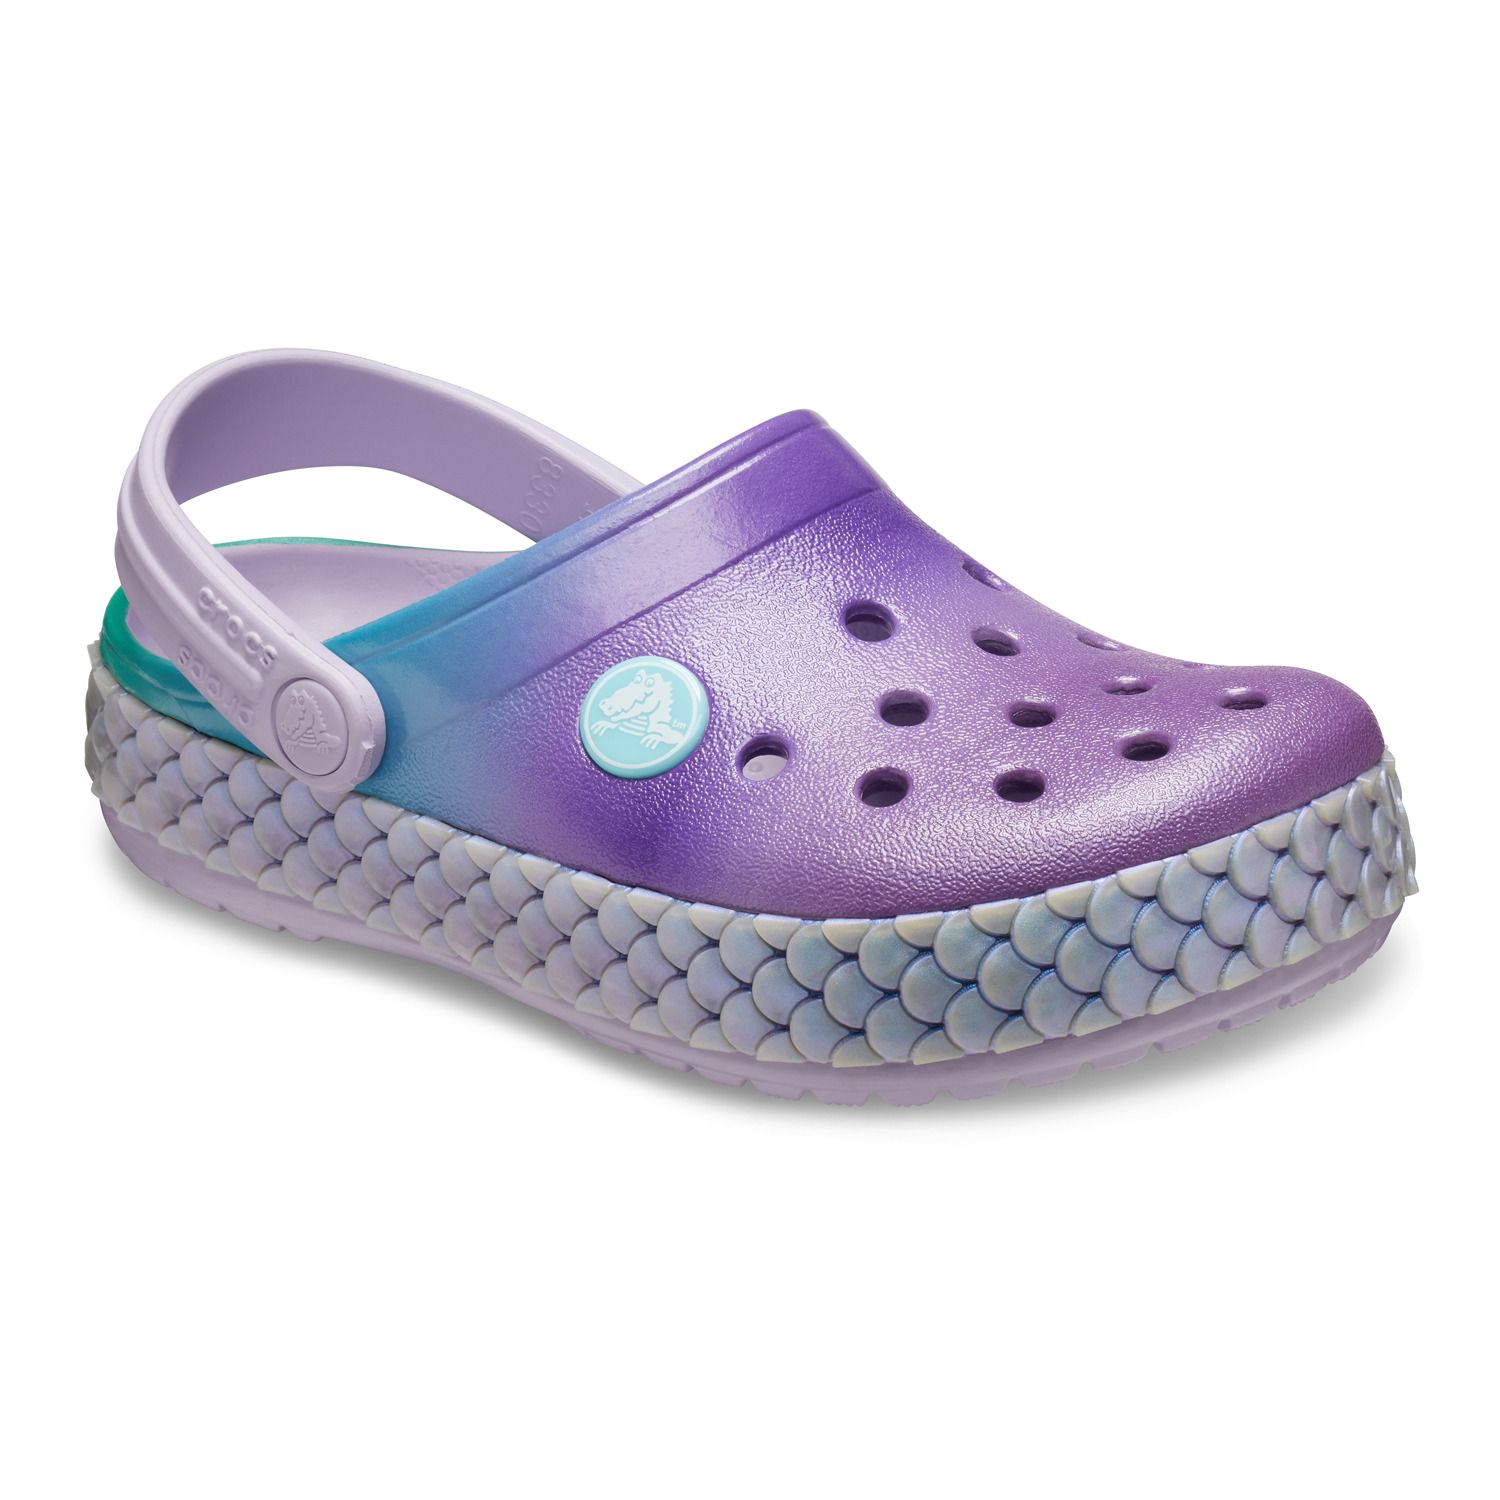 purple crocs for girls